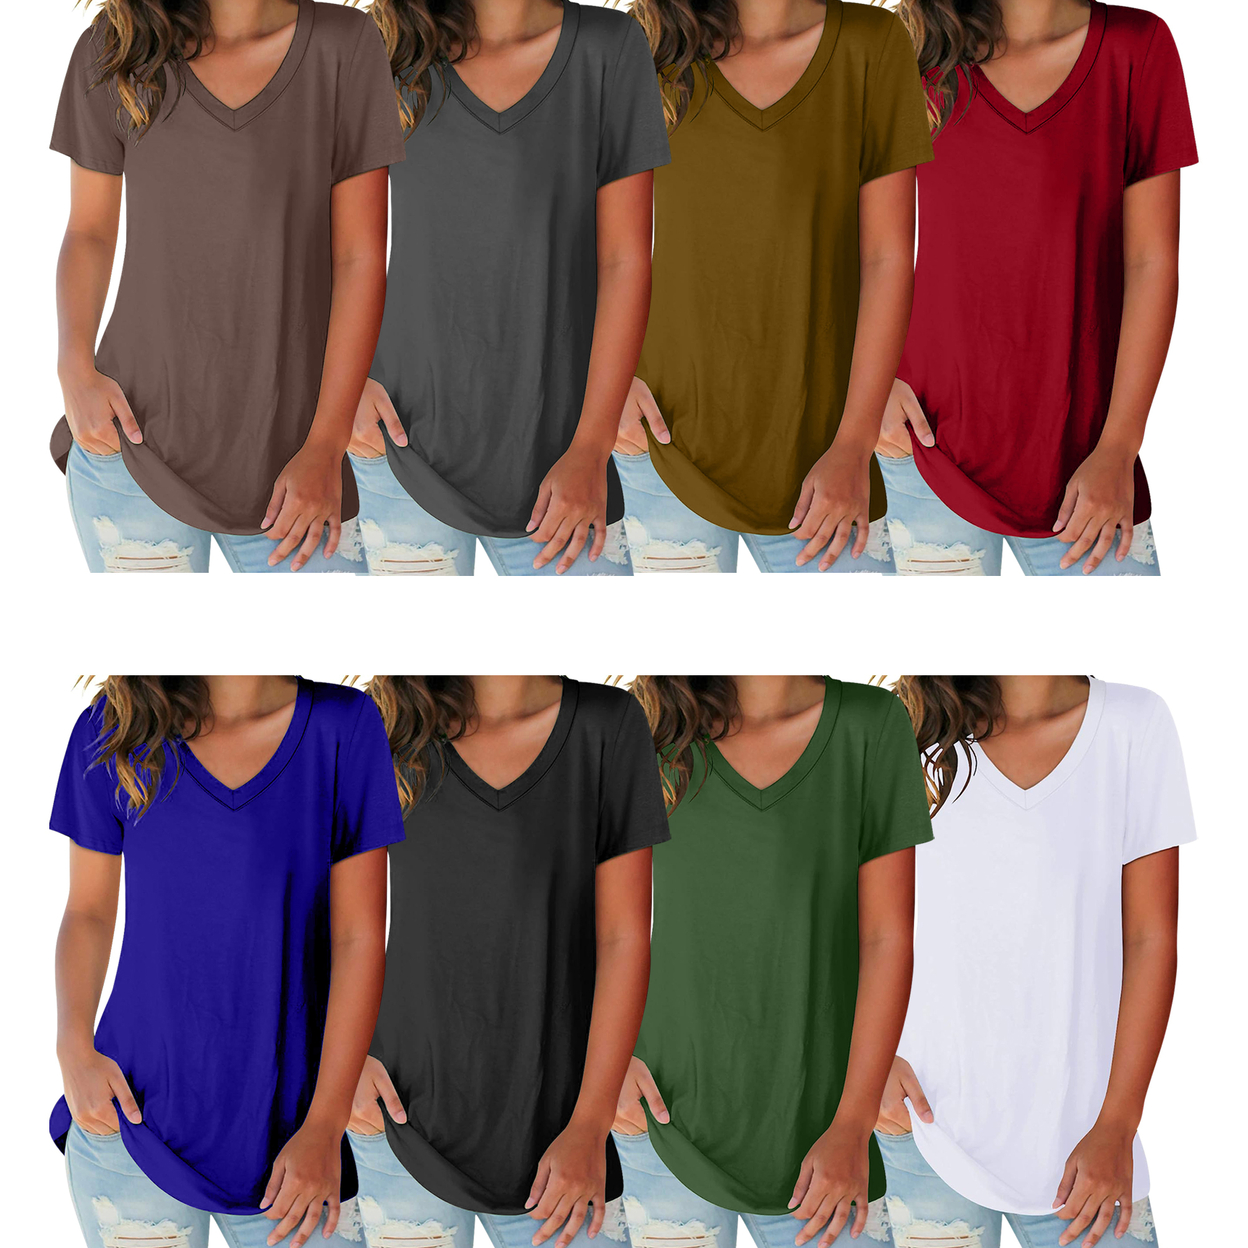 2-Pack: Women's Ultra Soft Smooth Cotton Blend Basic V-Neck Short Sleeve Shirts - White & Mustard, Medium